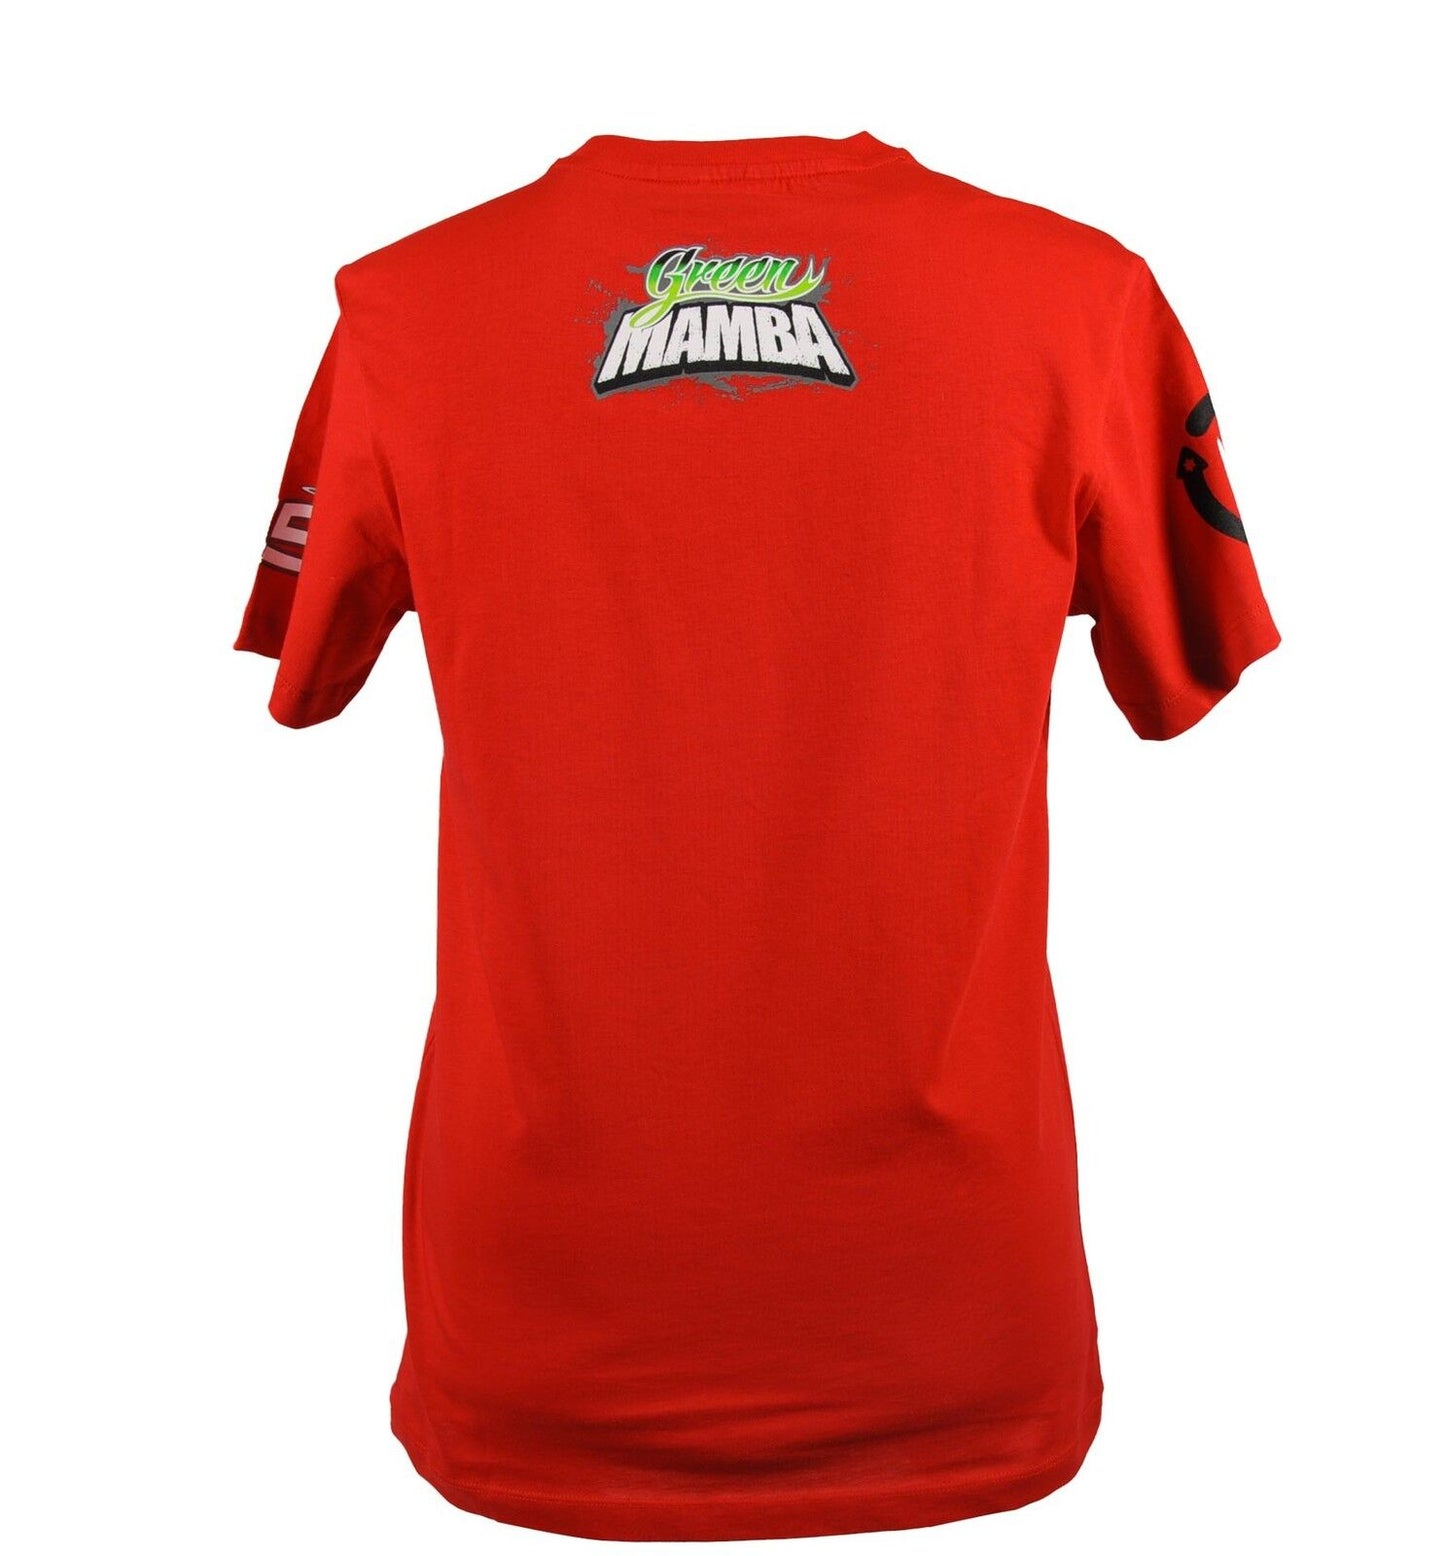 New Official Jorge Lorenzo Red 'Mamba' T'Shirt - 14 31208